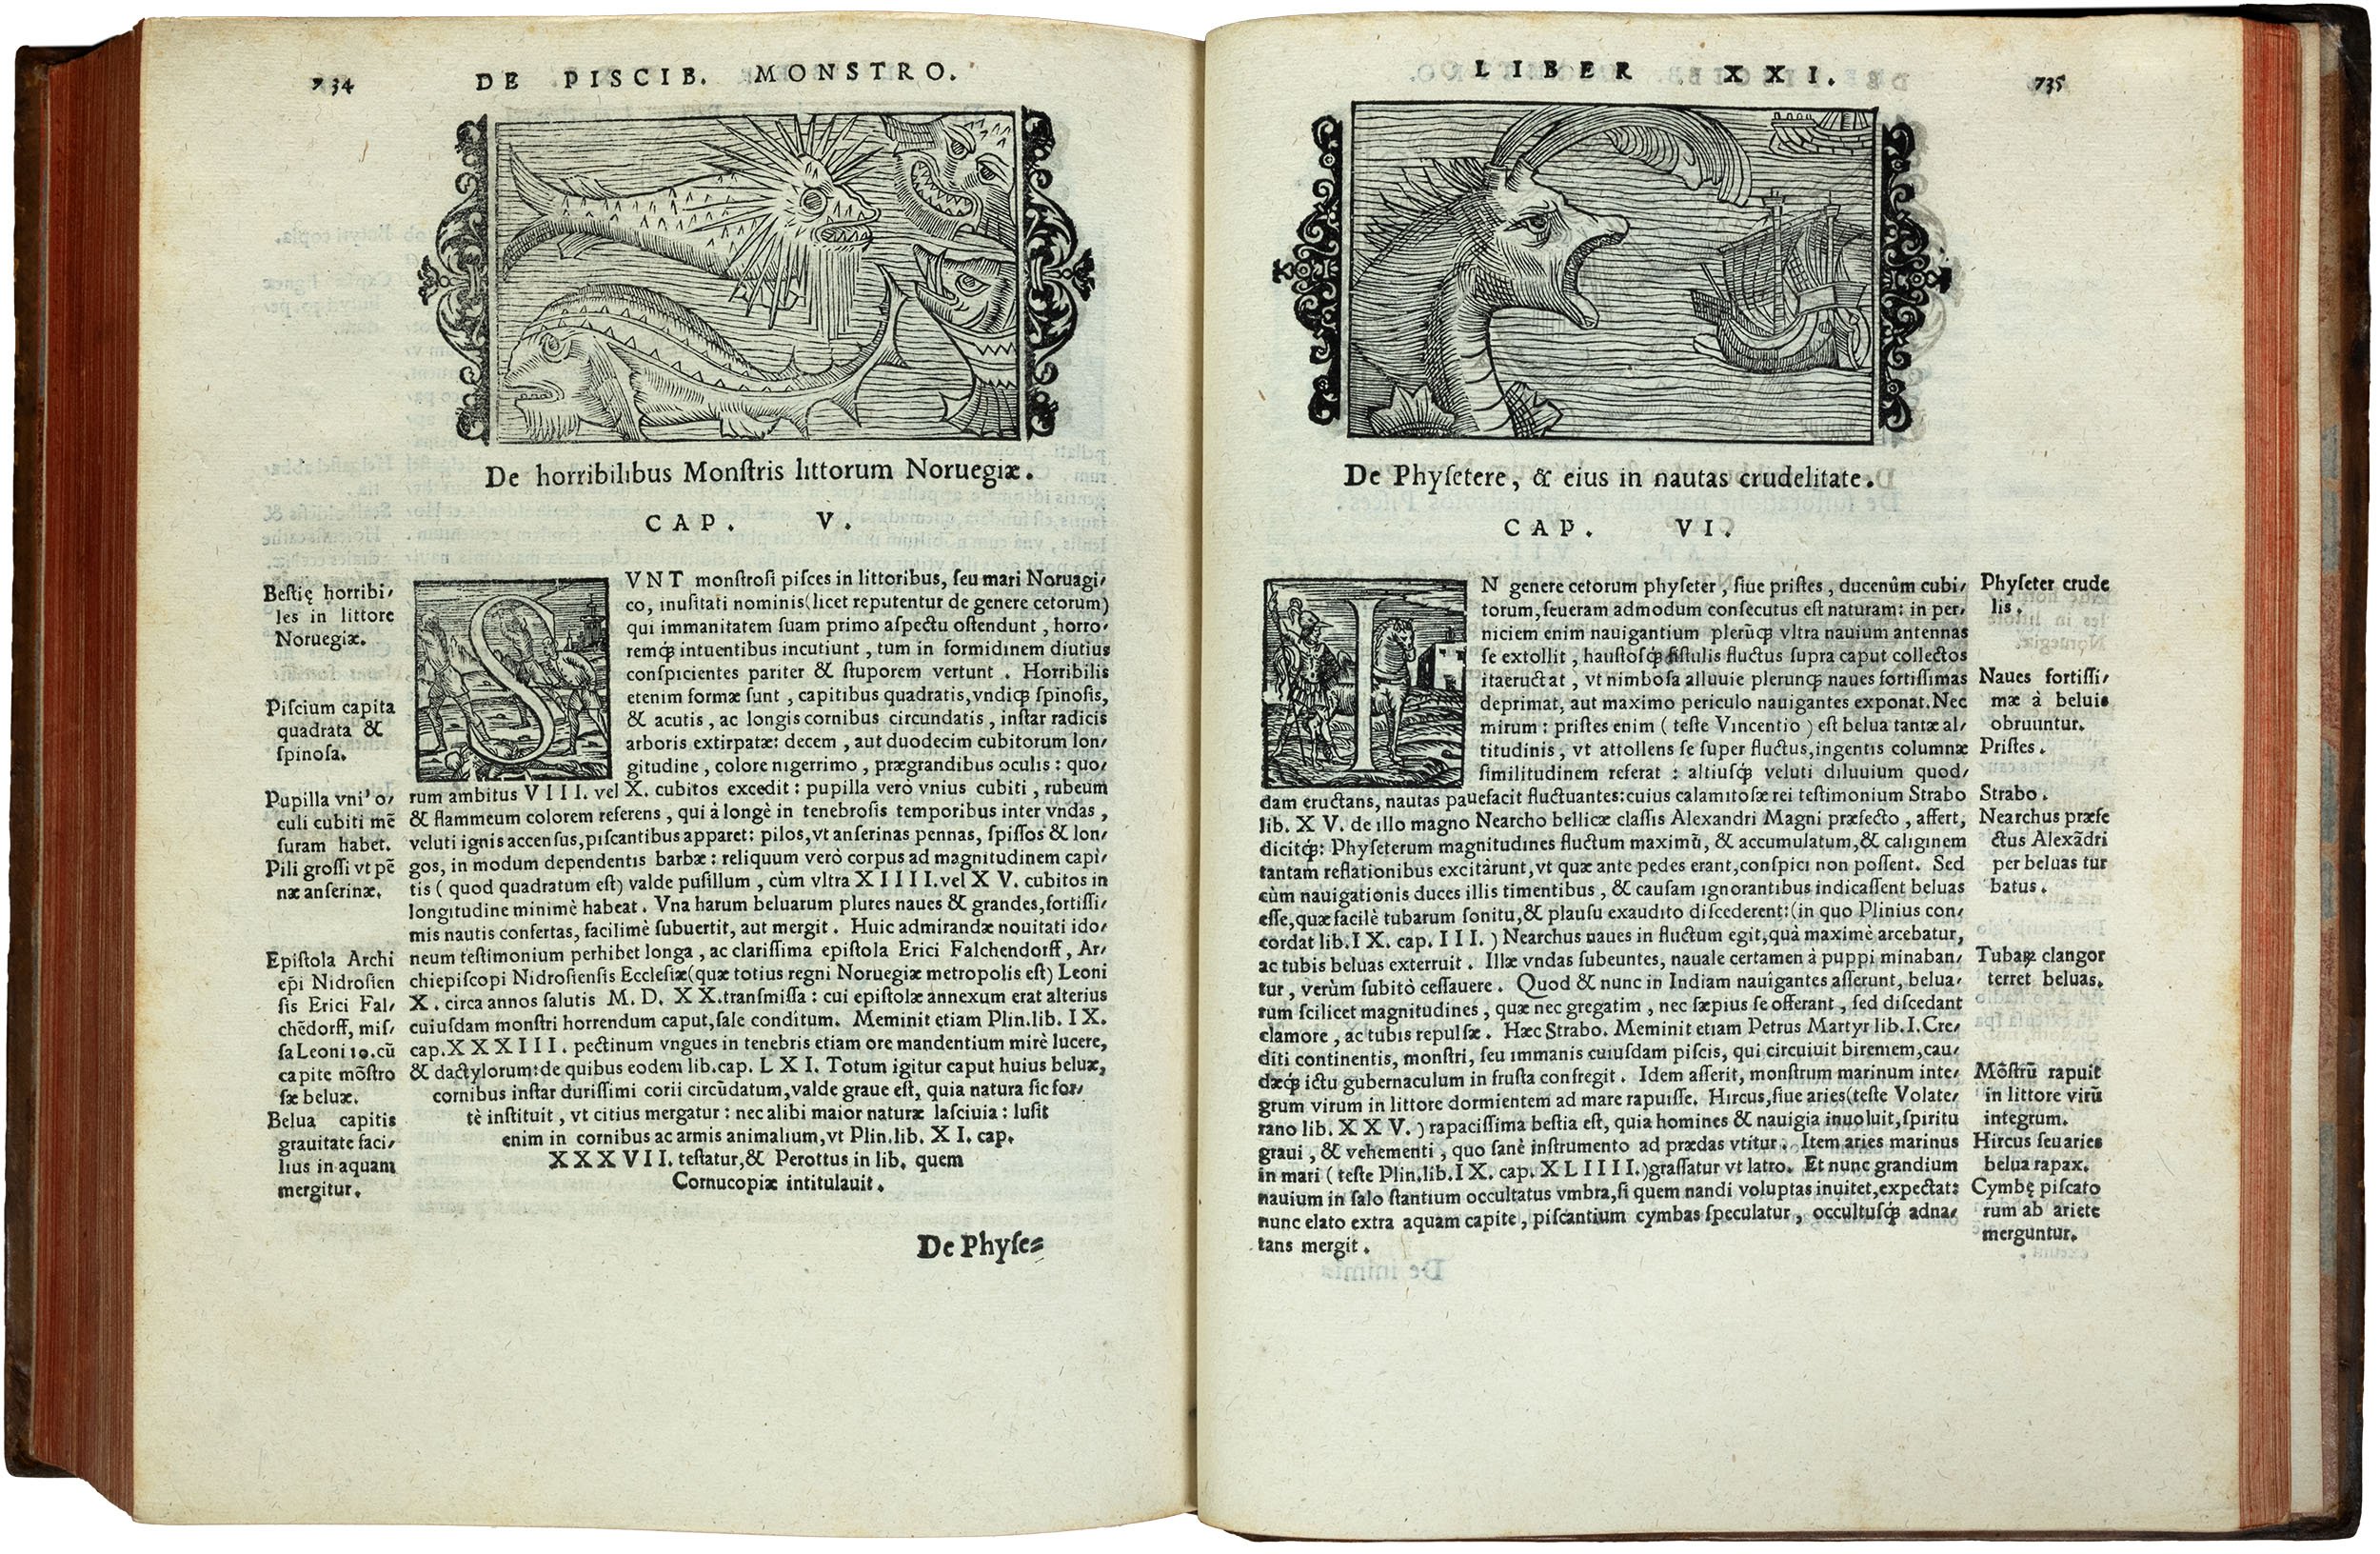 Olaus-Magnus-Historia-scandinavia-1555-first-edition-brunck-jeanson-42.jpg